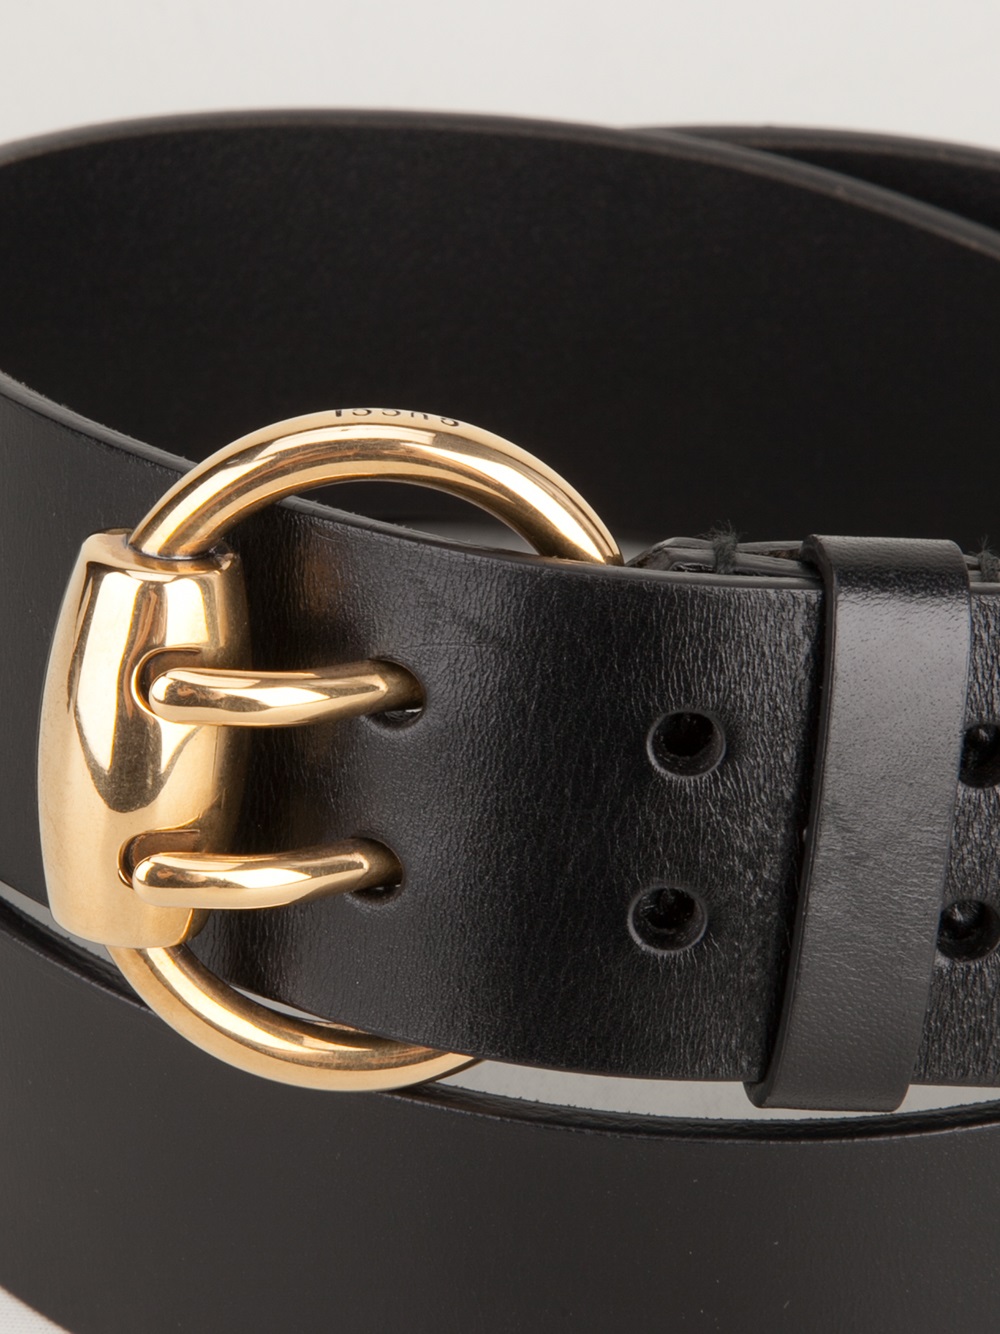 Lyst - Gucci Bridle Buckle Belt in Black for Men